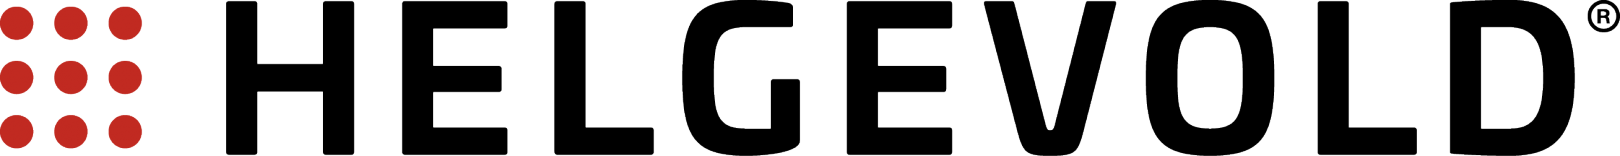 Helgevold logo